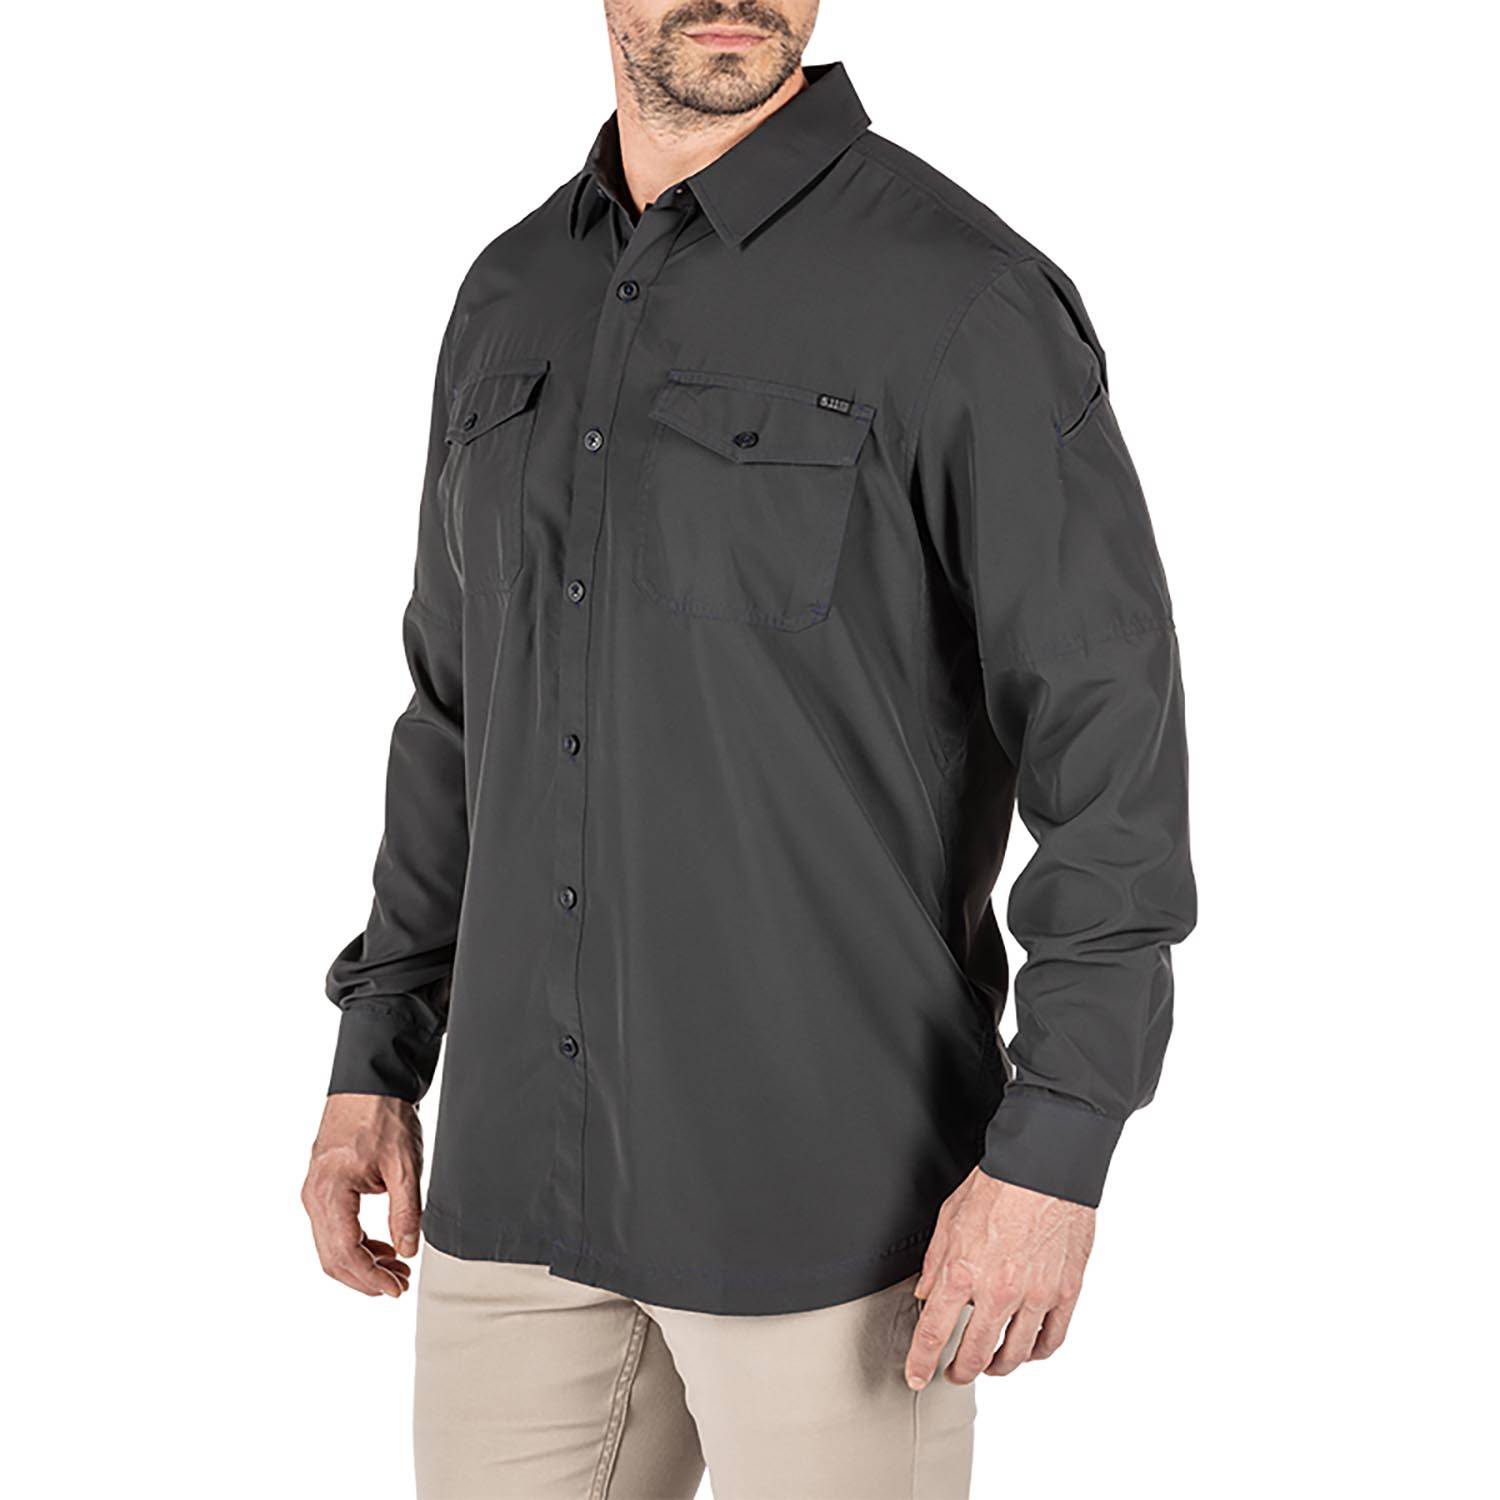 5.11 Tactical Men's Marksman Long Sleeve Shirt UPF 50+